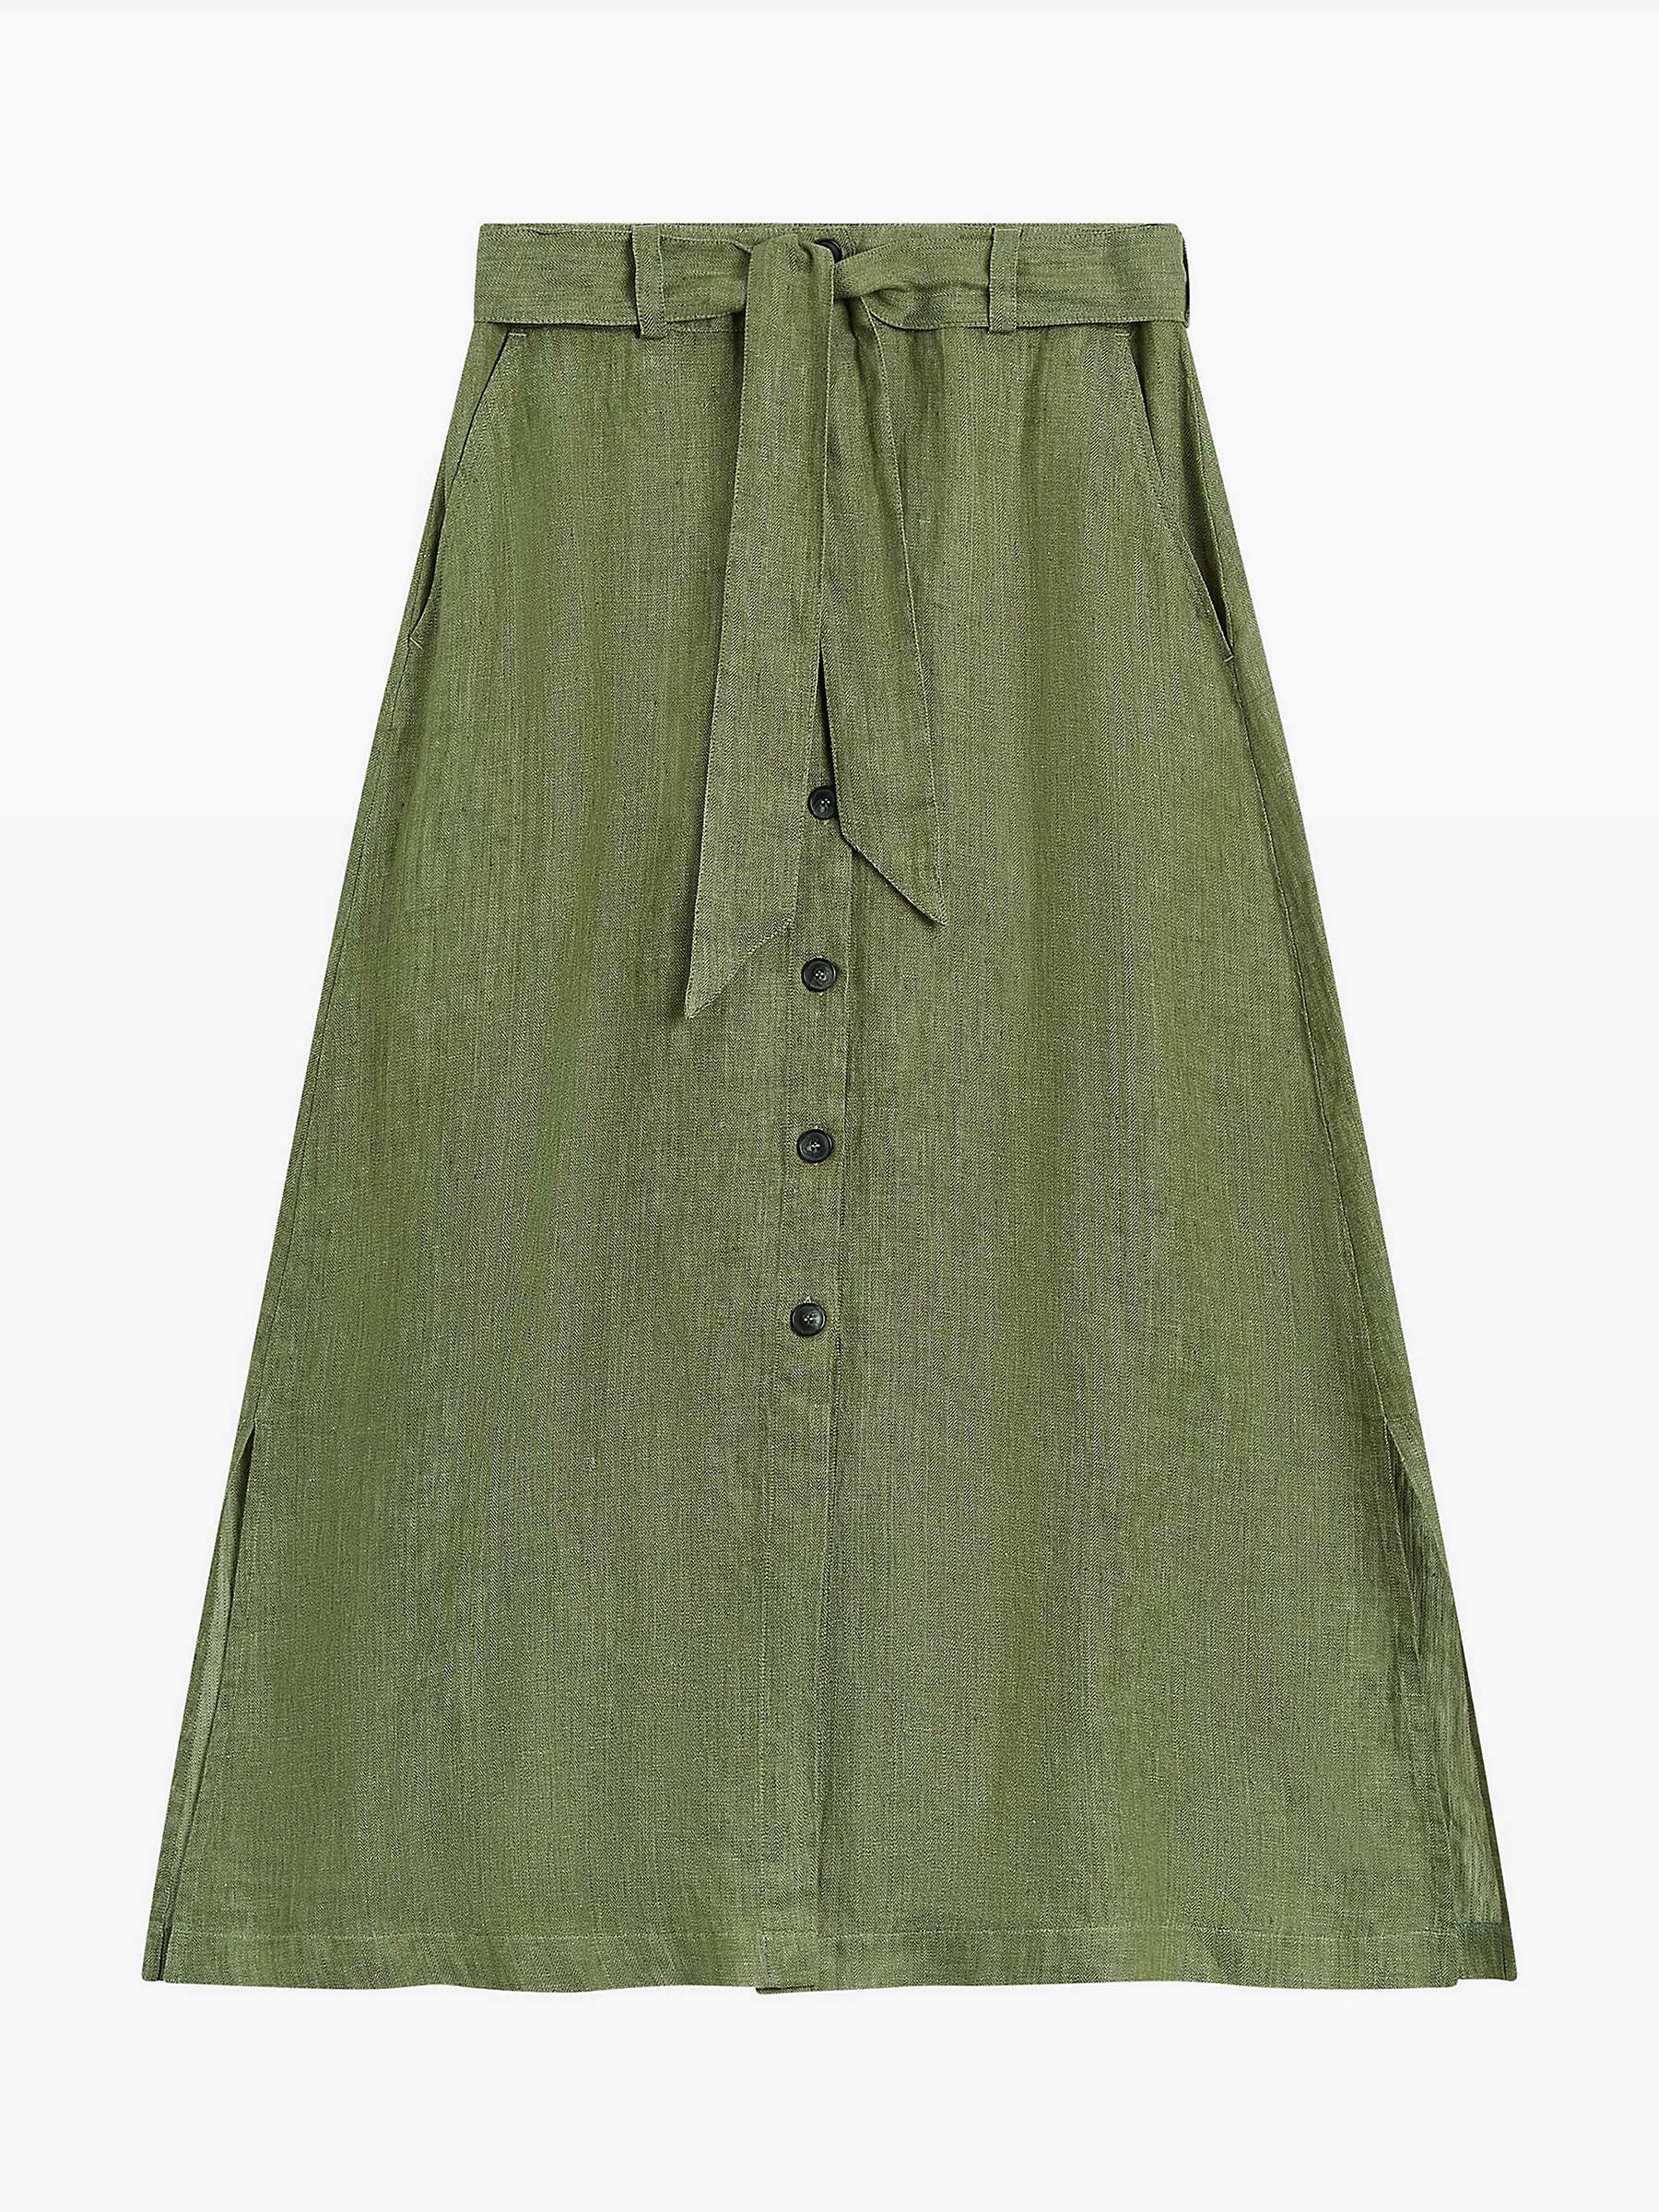 Brora Herringbone Weave Linen Skirt, Olive at John Lewis & Partners